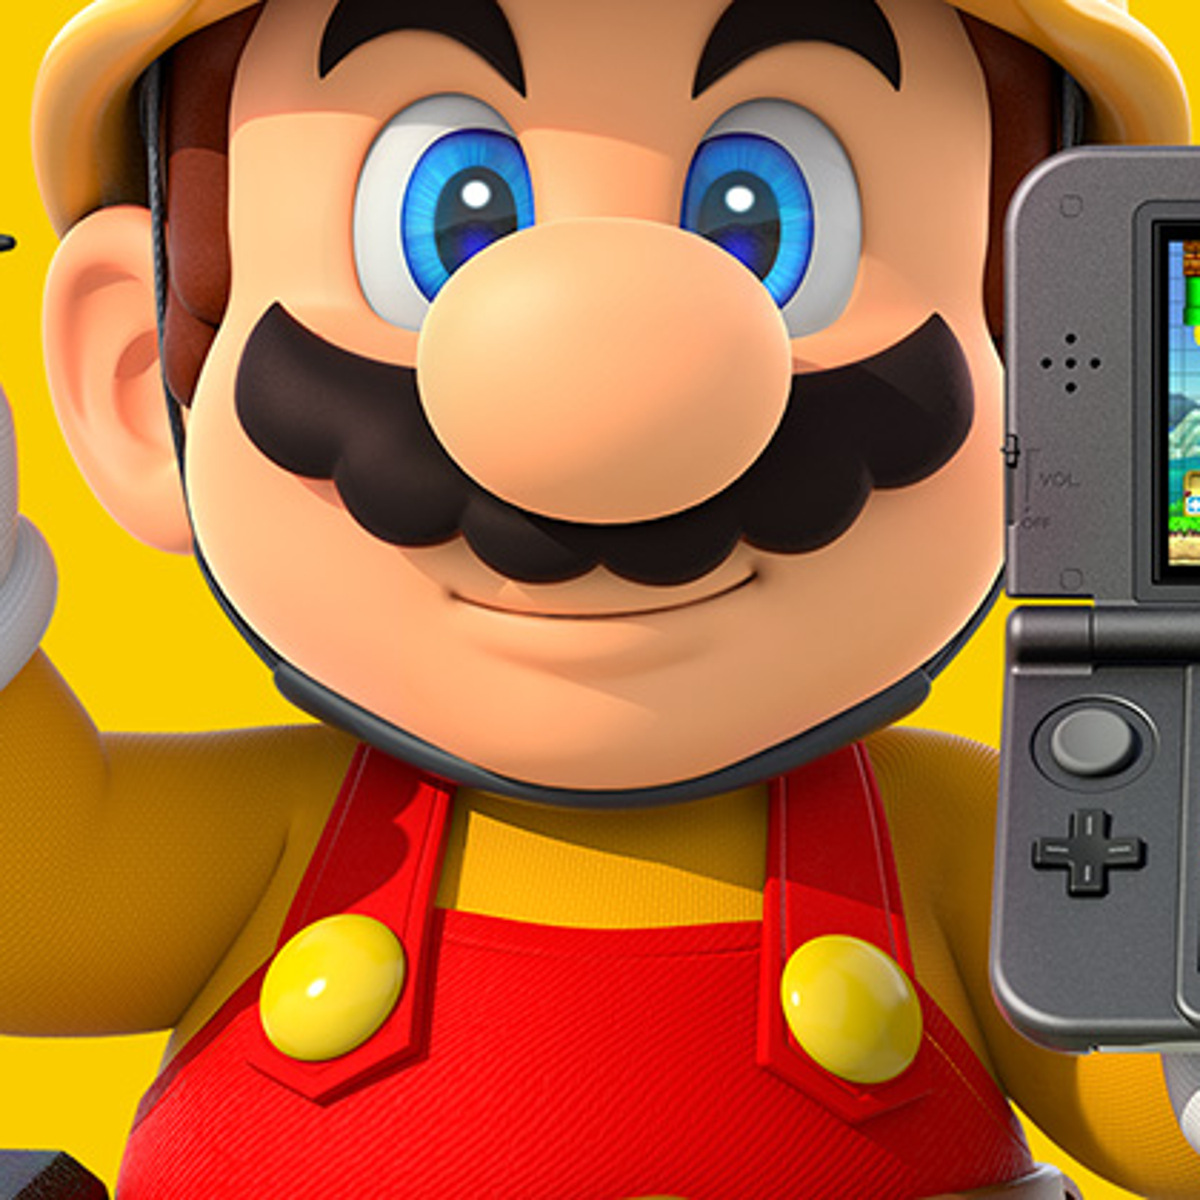 Download mario maker. Nintendo 3ds Mario. Super Mario 3ds. Нинтендо 3дс super Mario maker. Марио 3 супер Нинтендо.